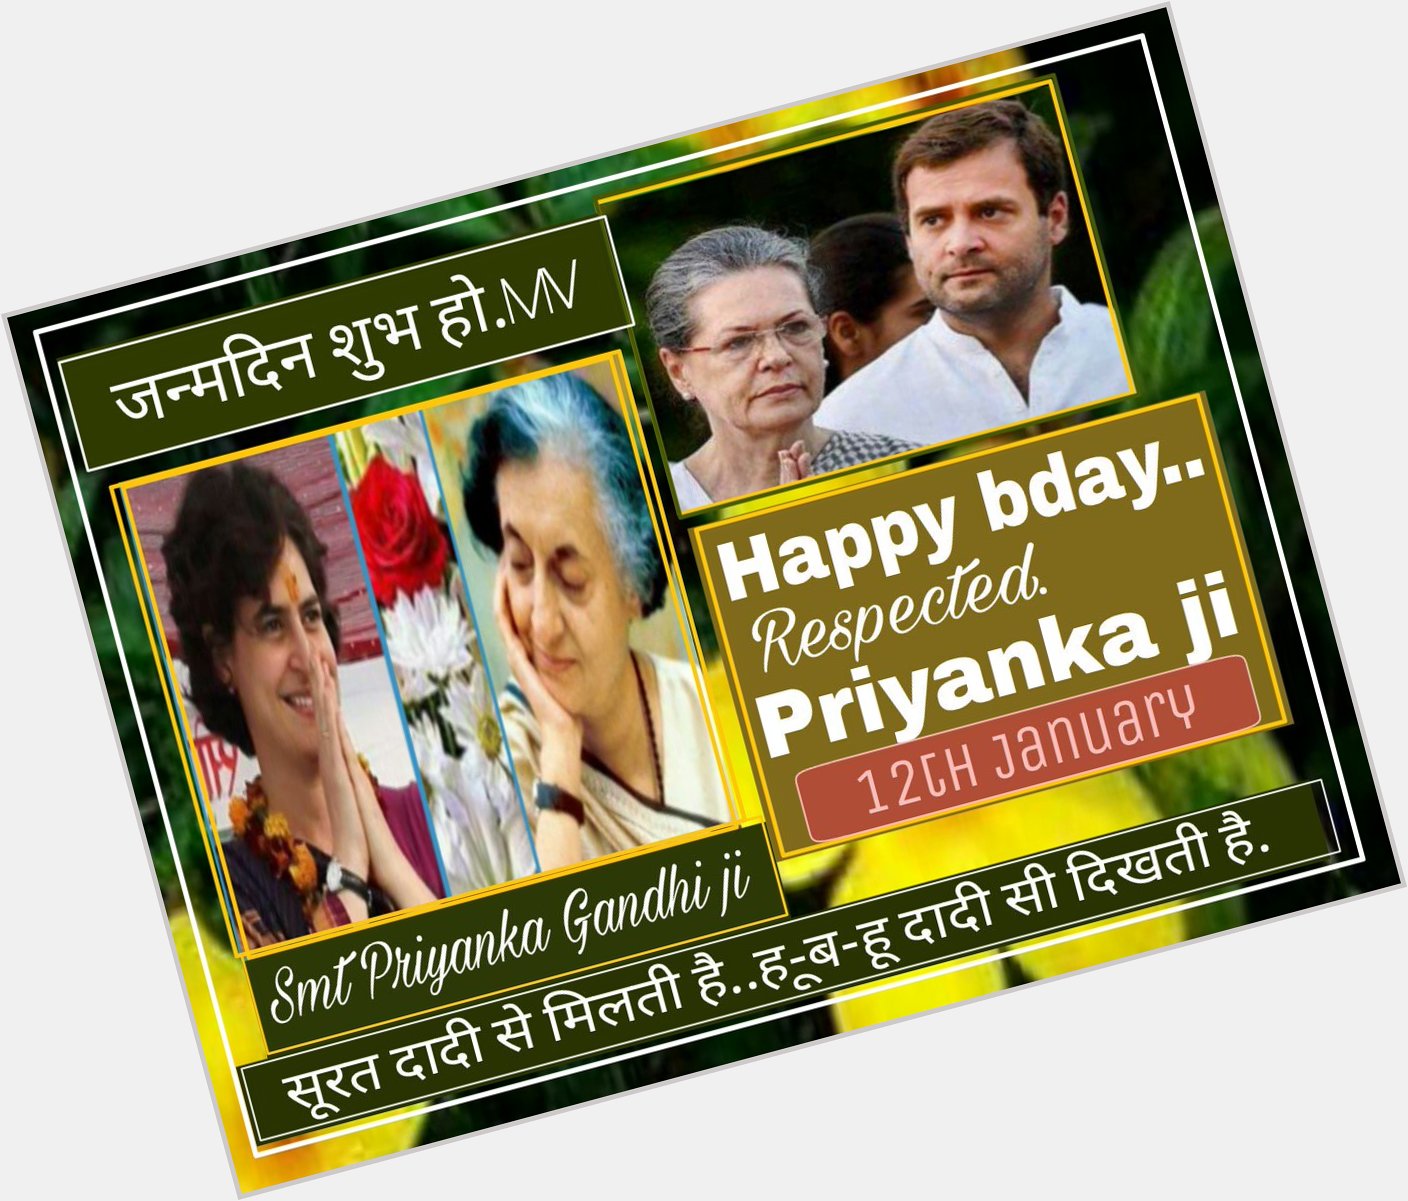 Happy bday.. Respected Priyanka Gandhi ji.12th January.  